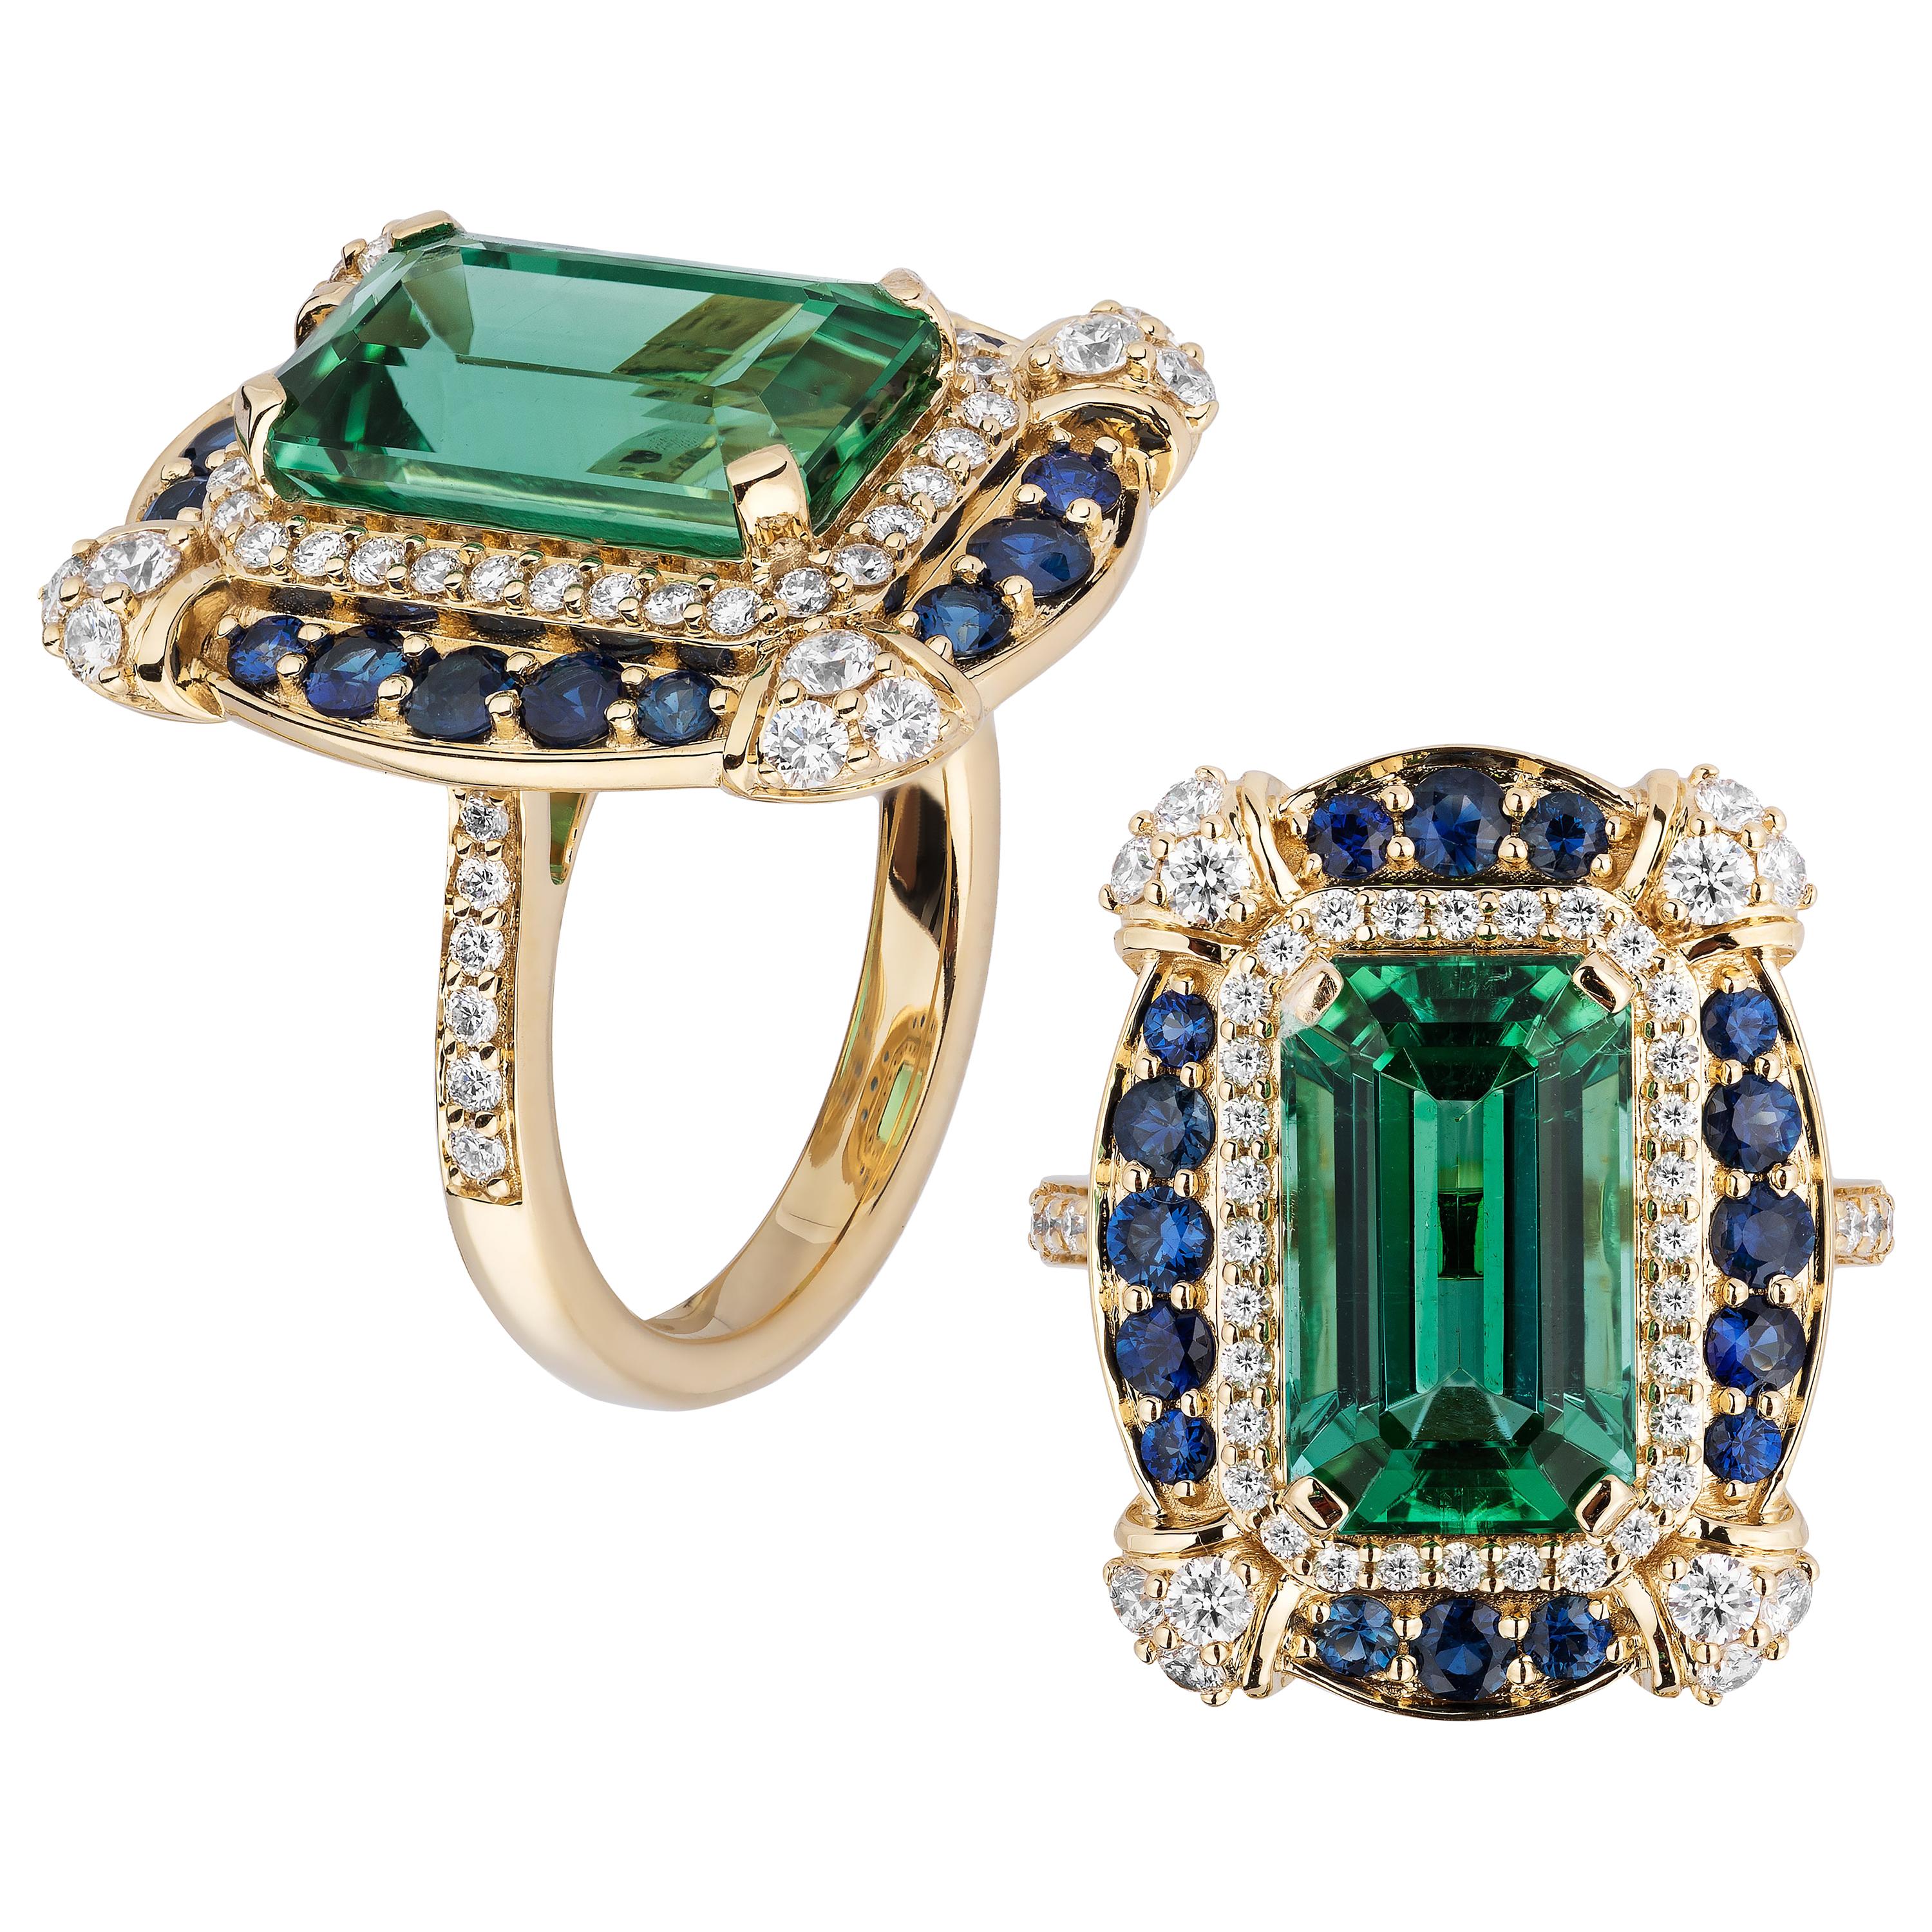 Goshwara Green Tourmaline Emerald Cut with Diamonds and Sapphire Ring